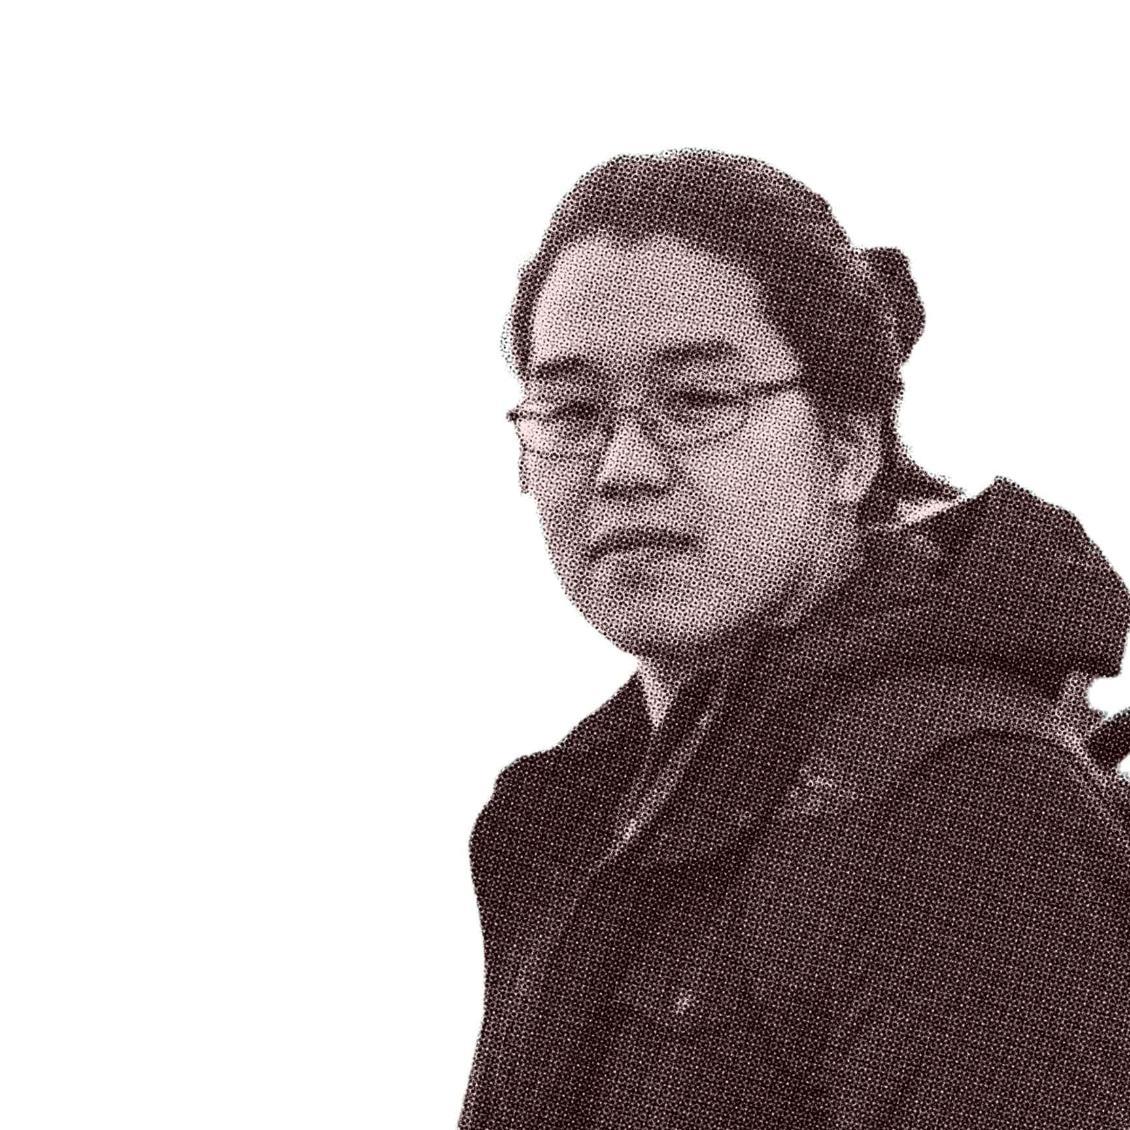 Photograph of Design Student Joseph Kim